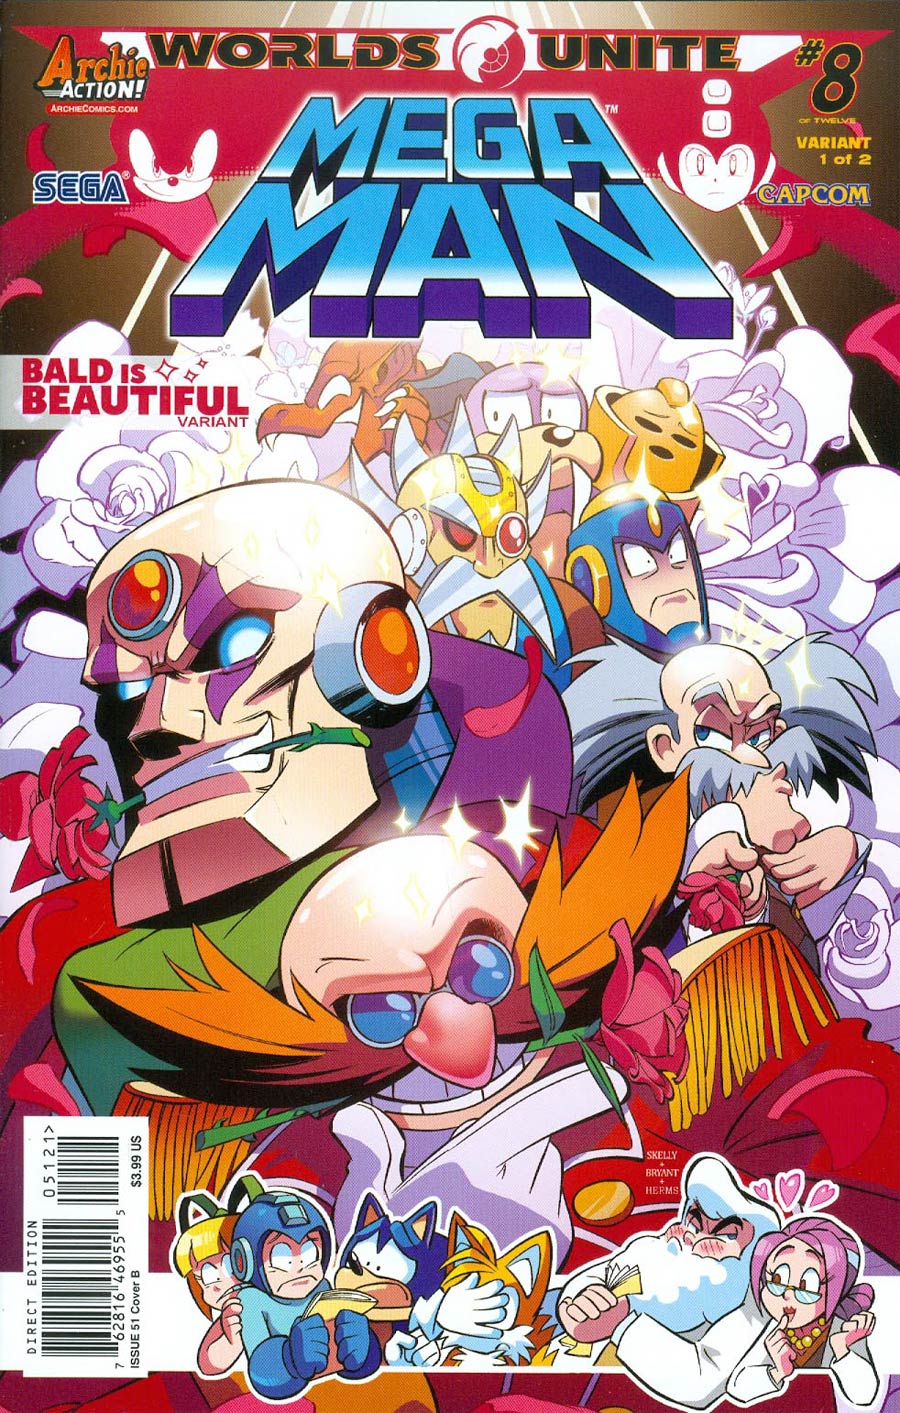 Mega Man Vol 2 #51 Cover B Variant Diana Skelly Cover (Worlds Unite Part 8)